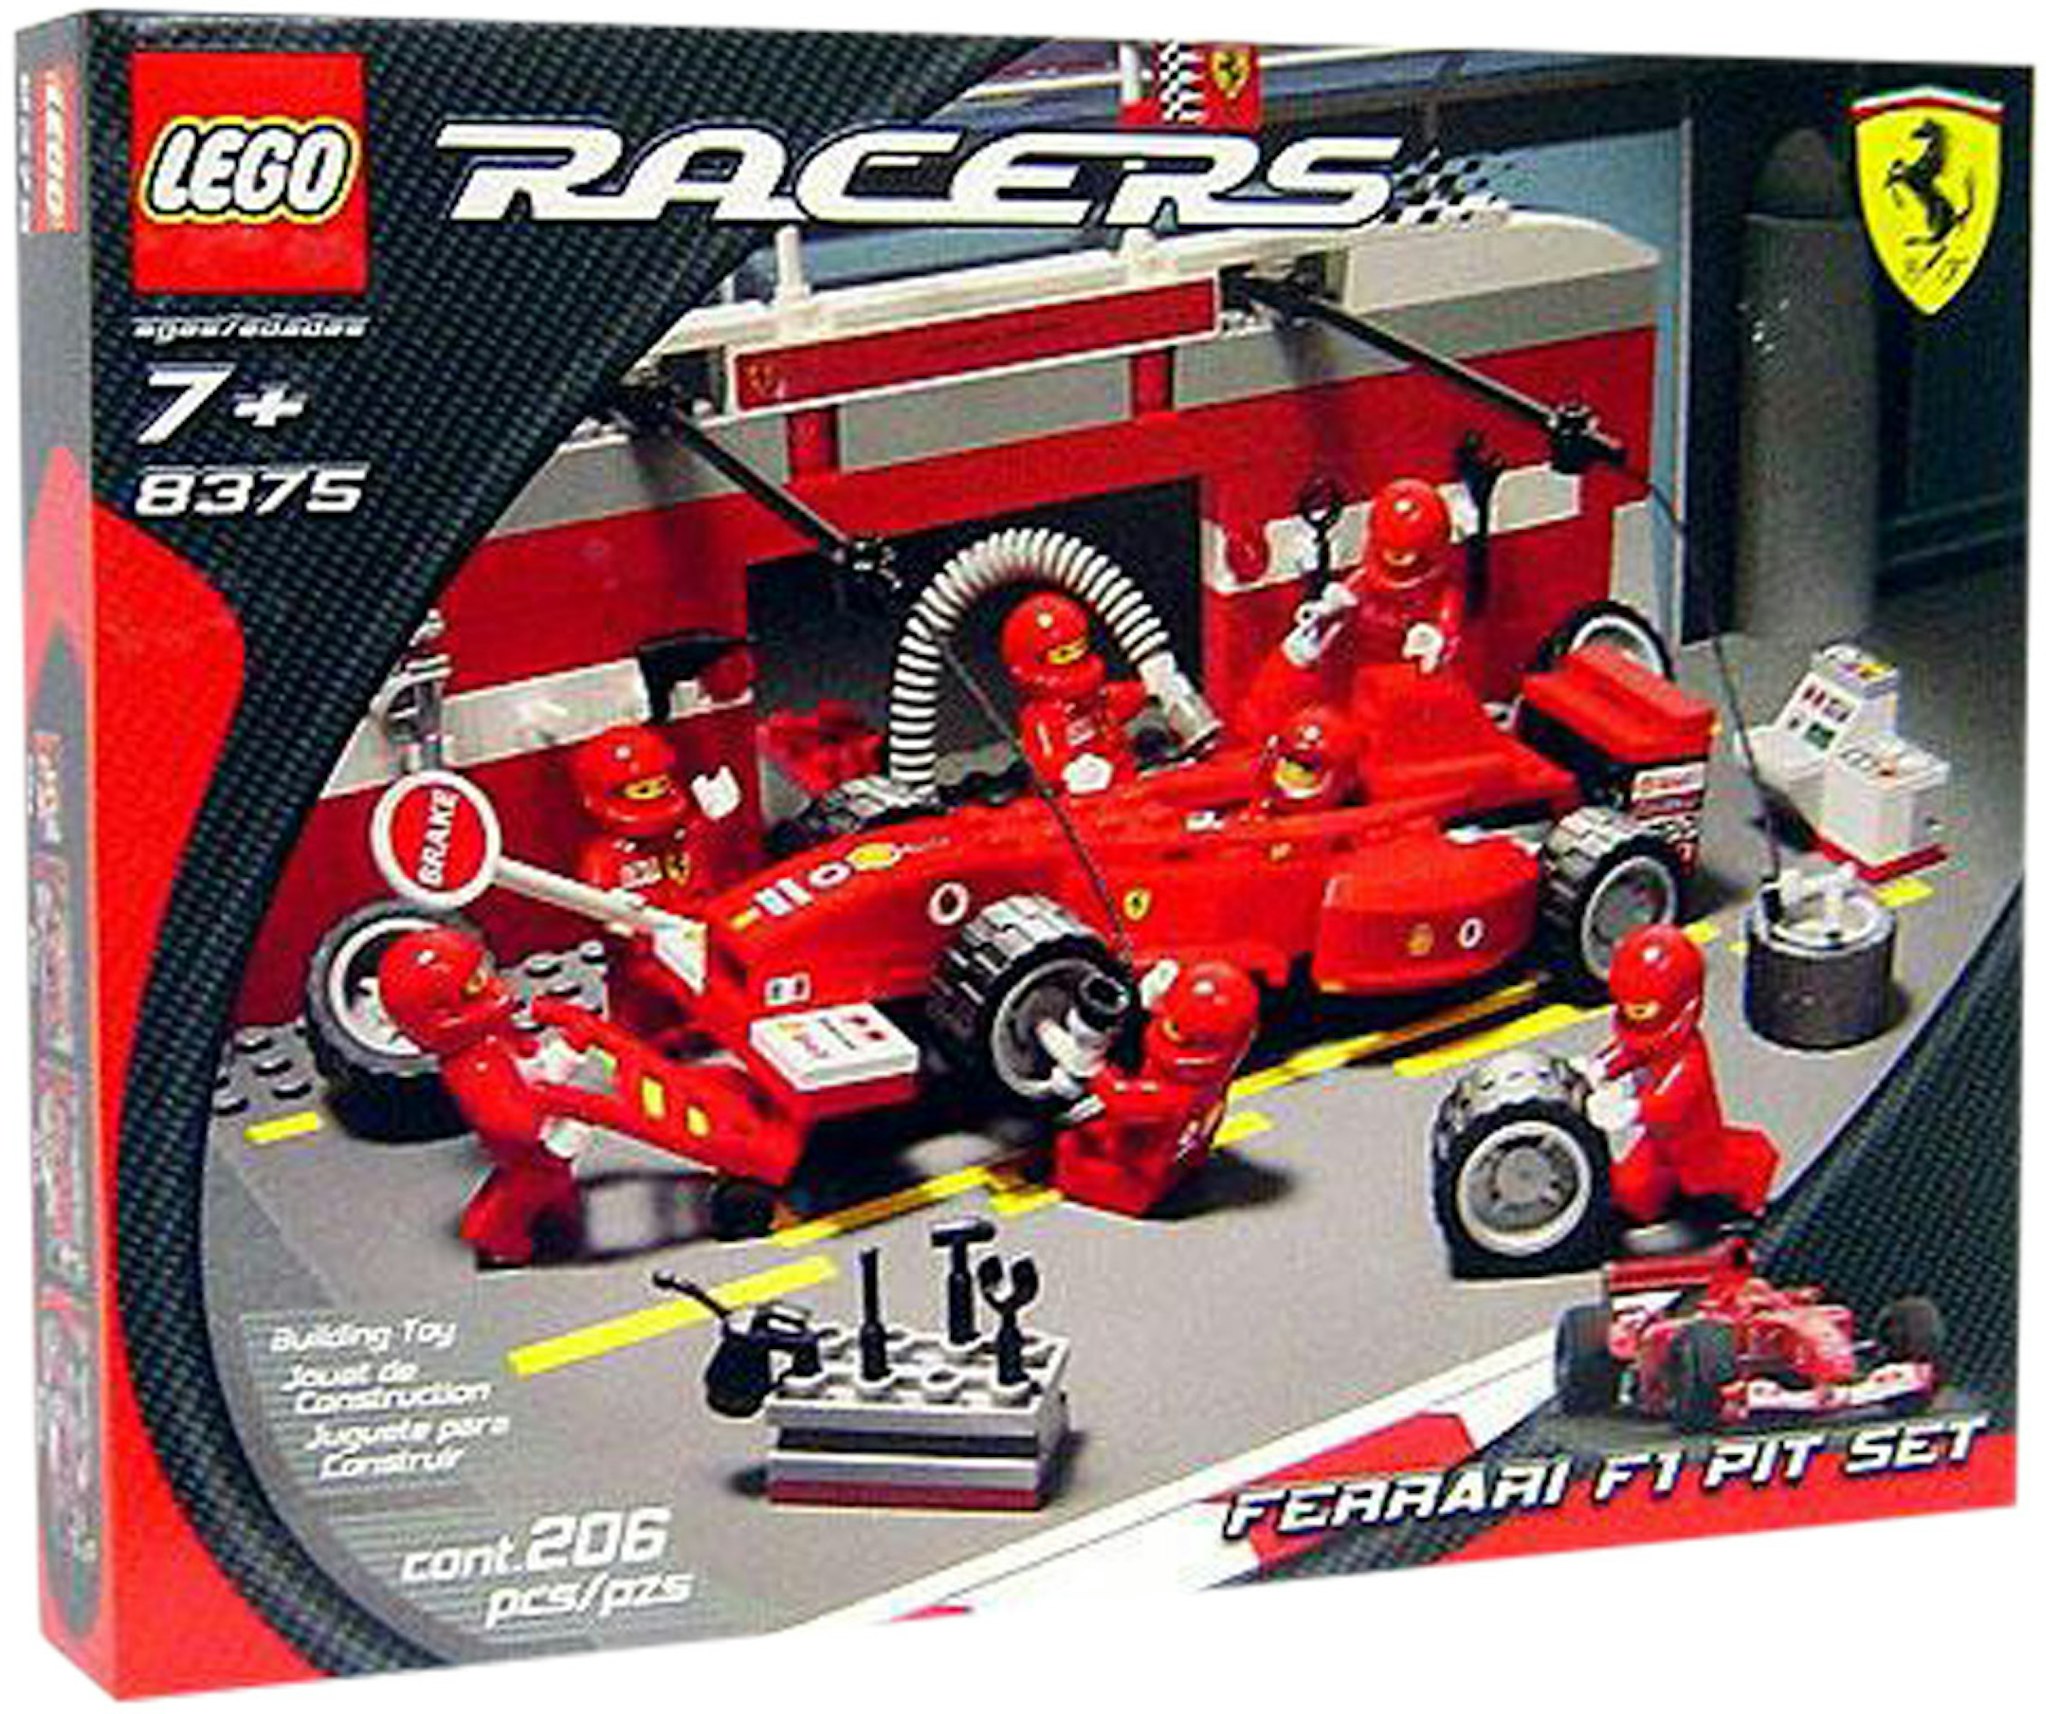 LEGO Ferrari Pit Set 8375 -